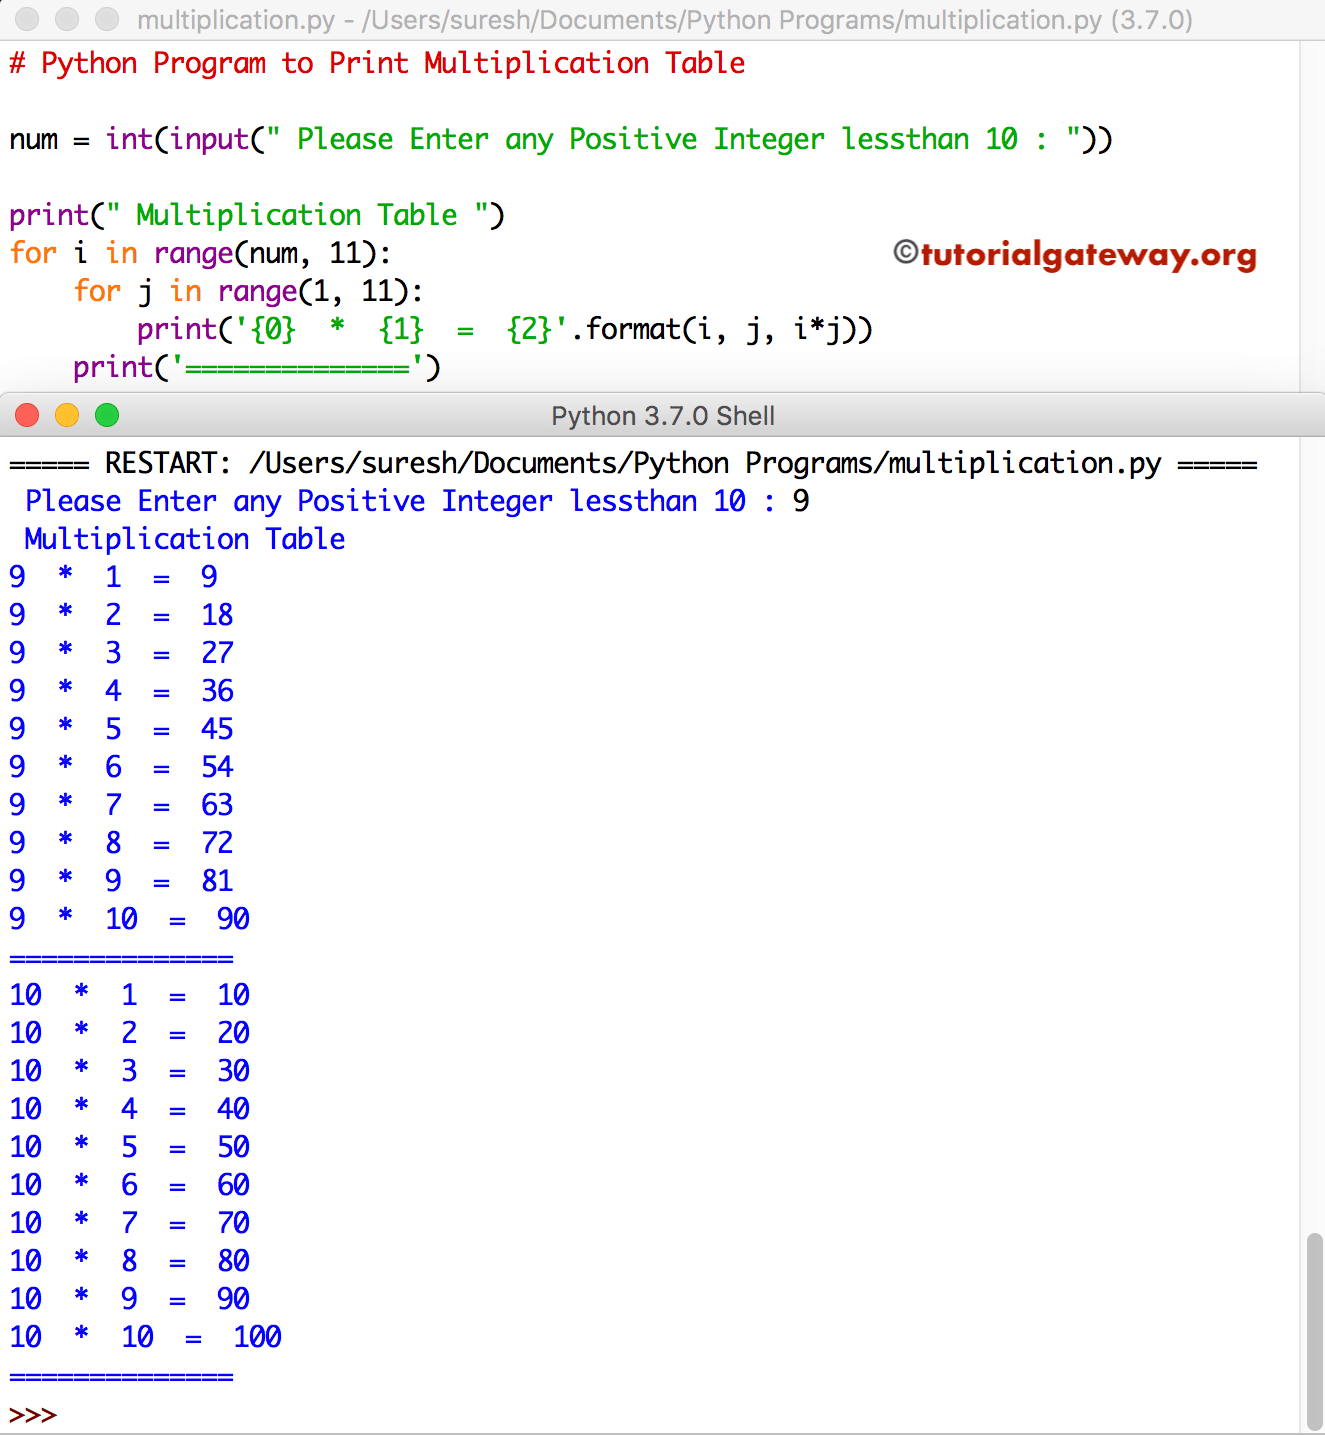 Python Program To Print Multiplication Table